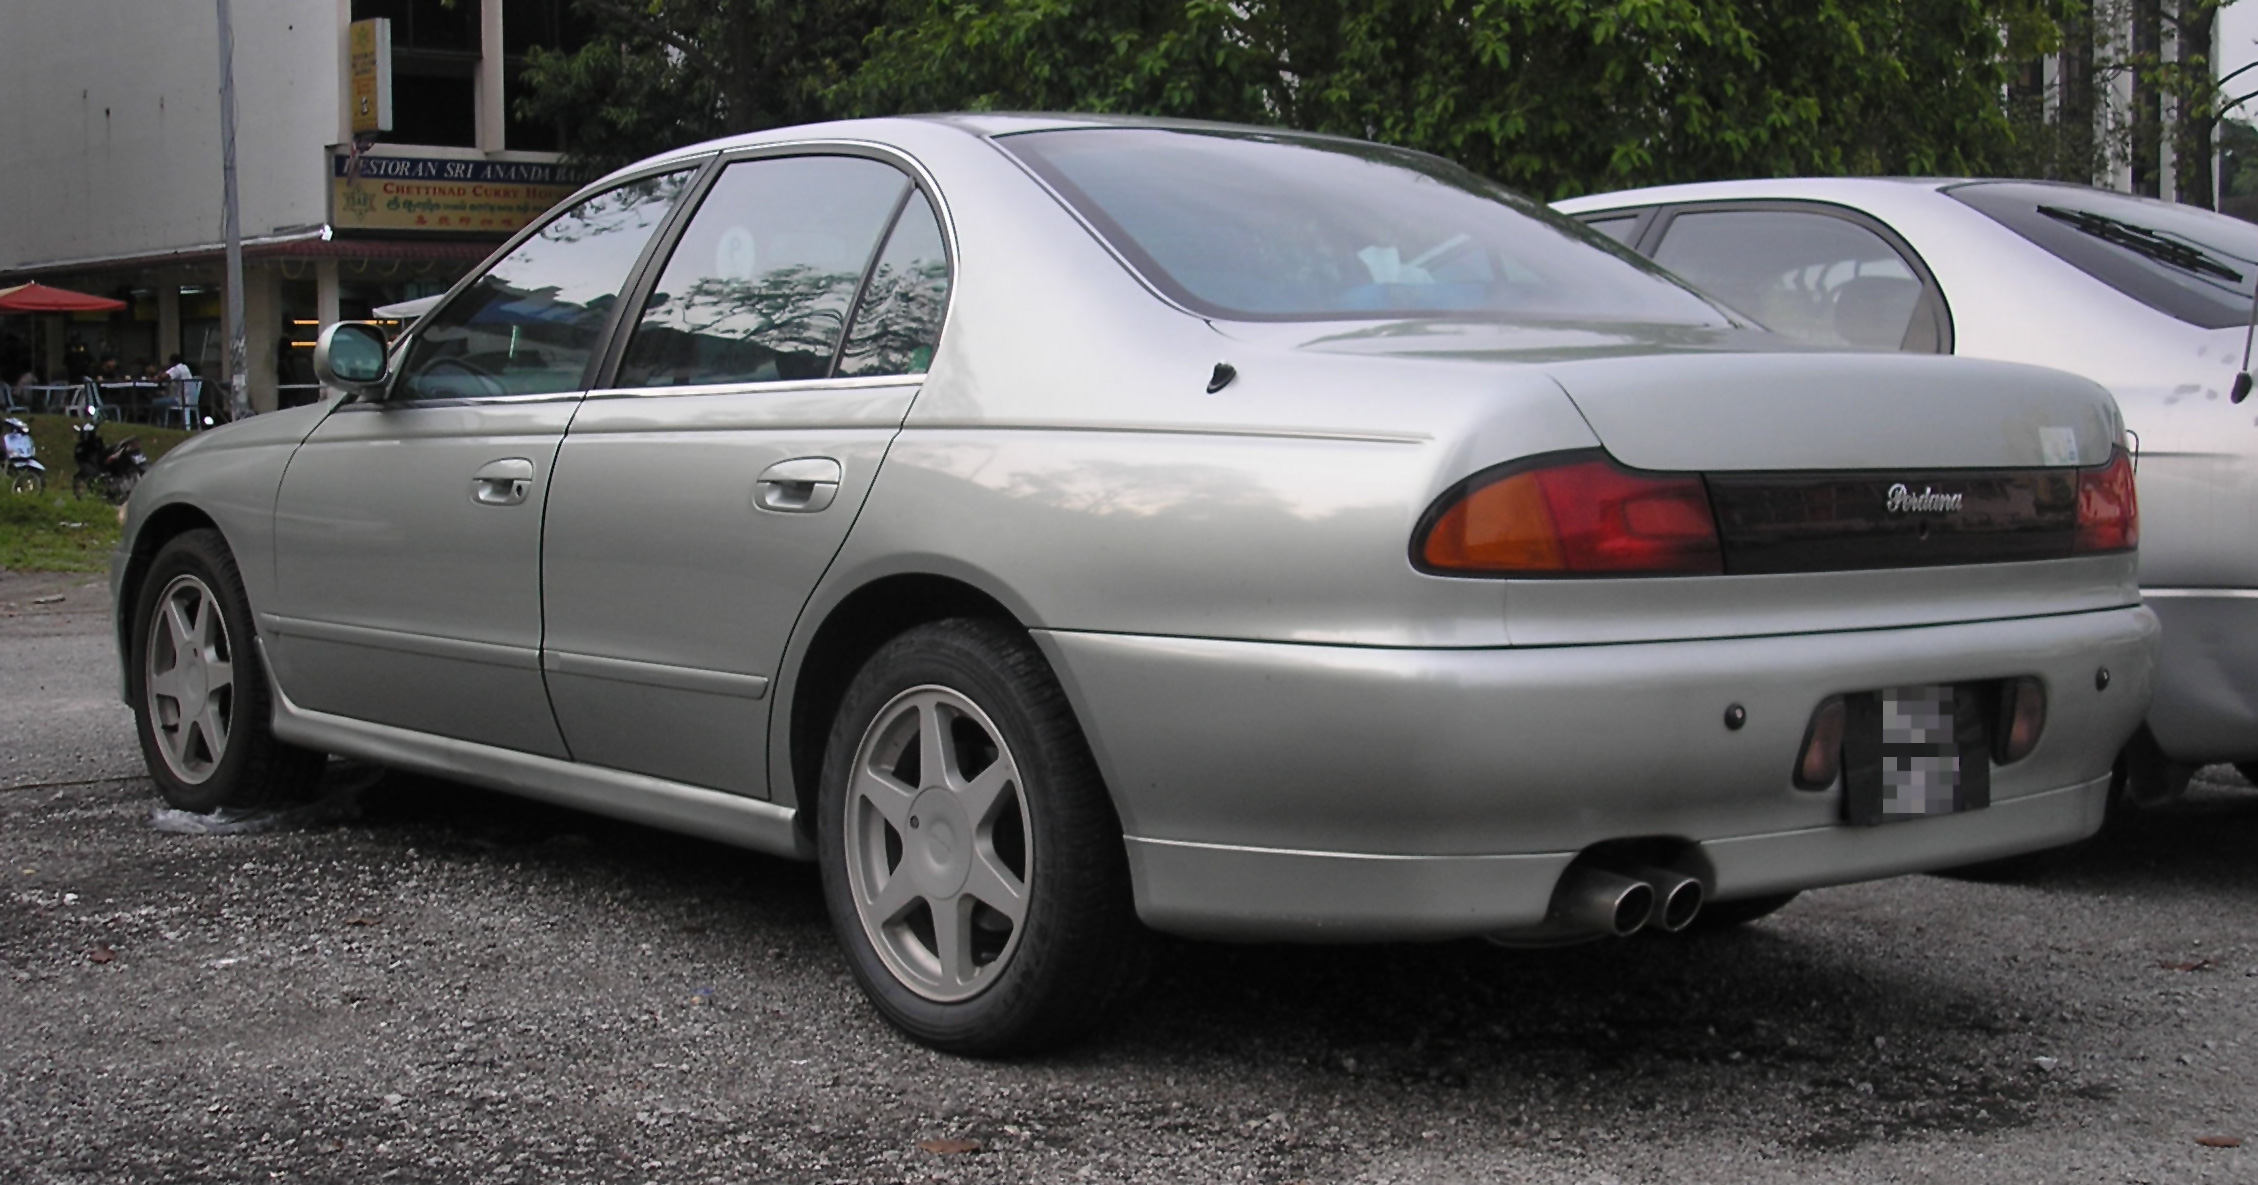 File:Proton Perdana V6 (rear), Kuala Lumpur.jpg - Wikimedia Commons